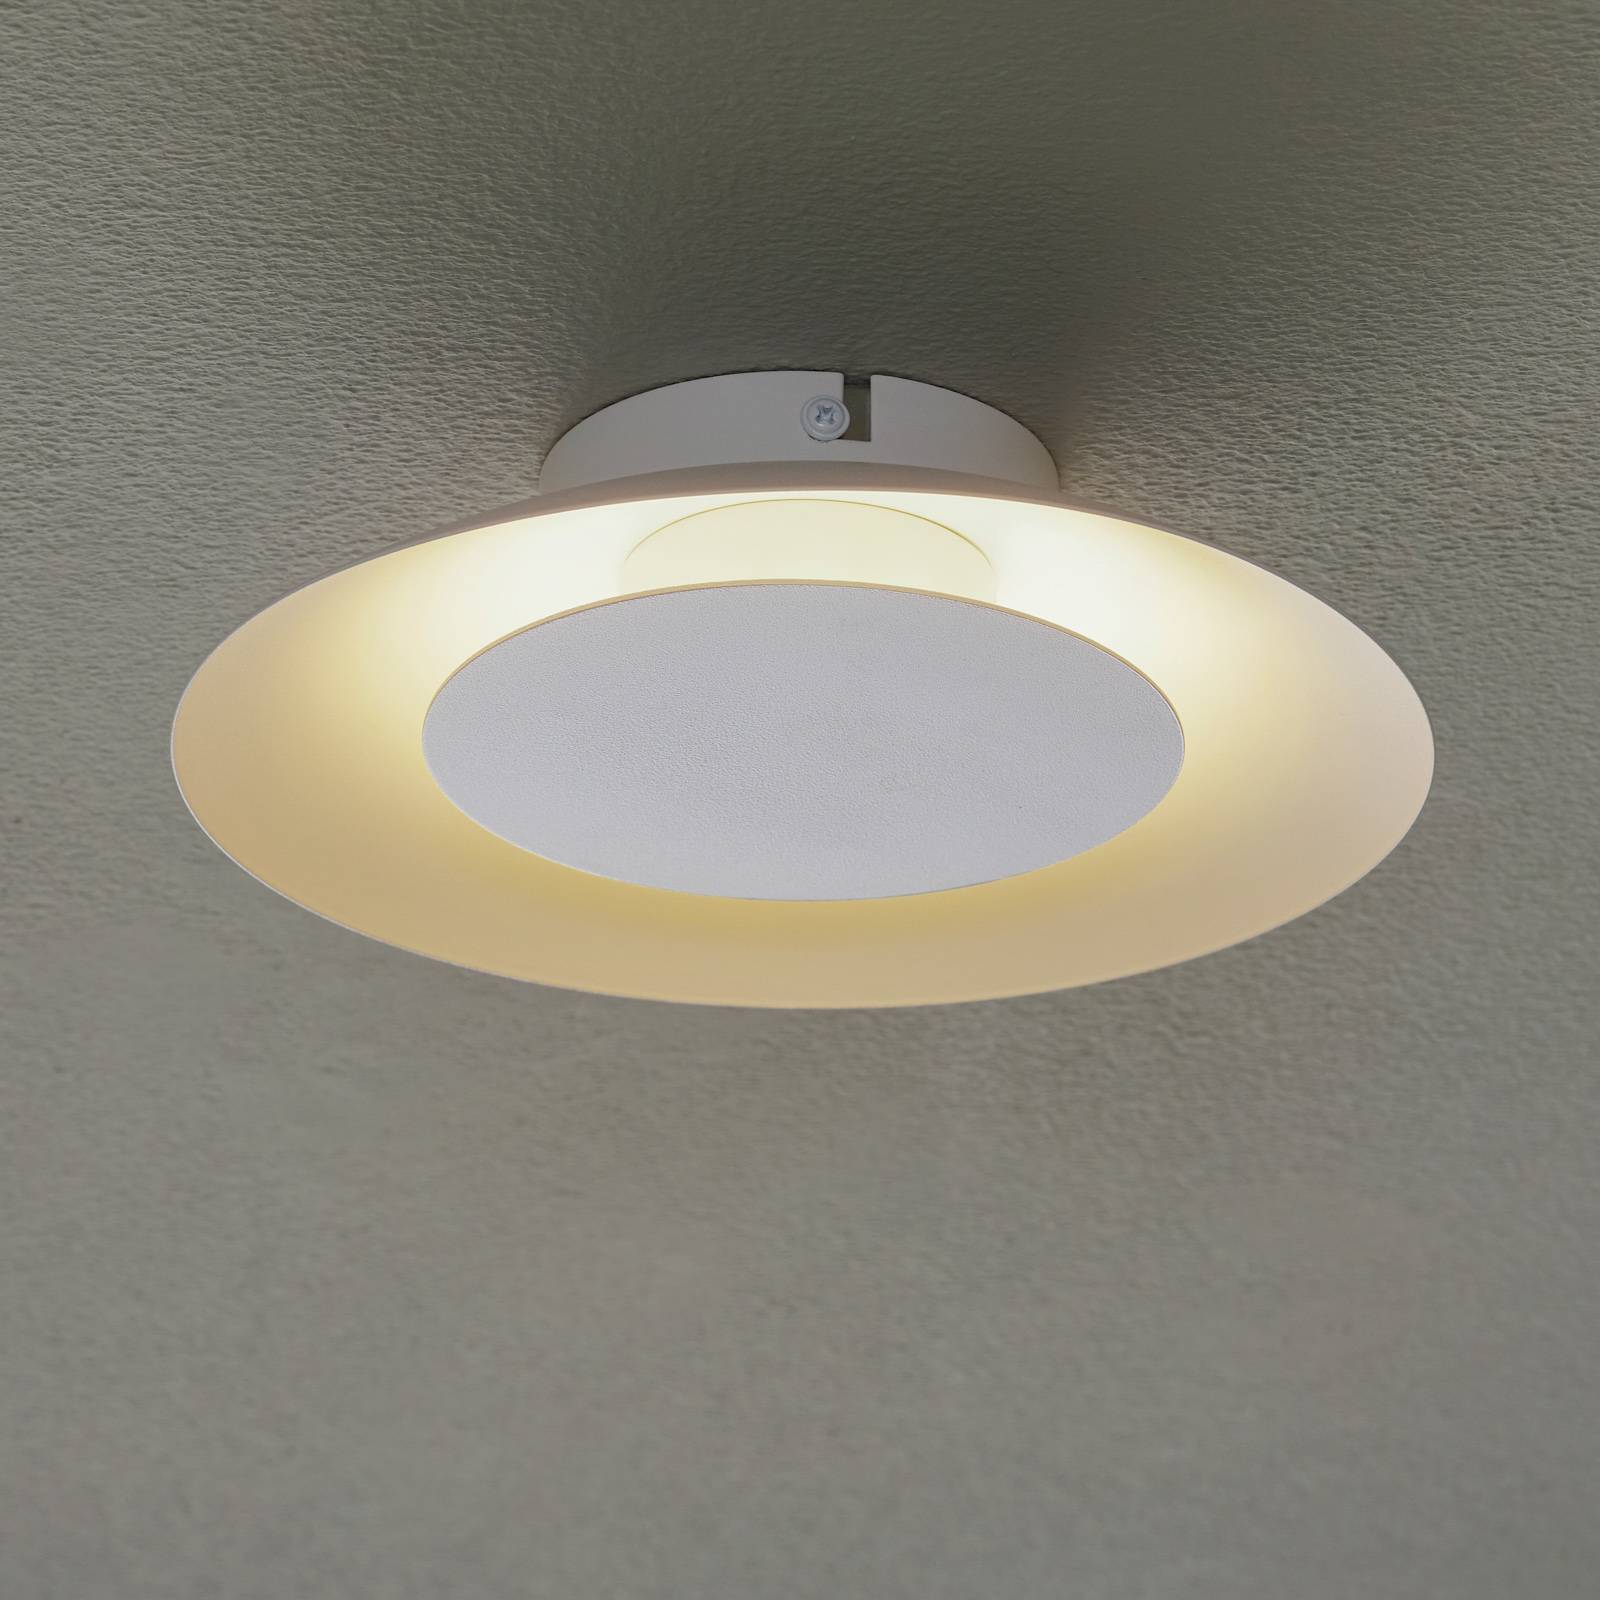 Lampa sufitowa LED Foskal biała, Ø 21,5 cm